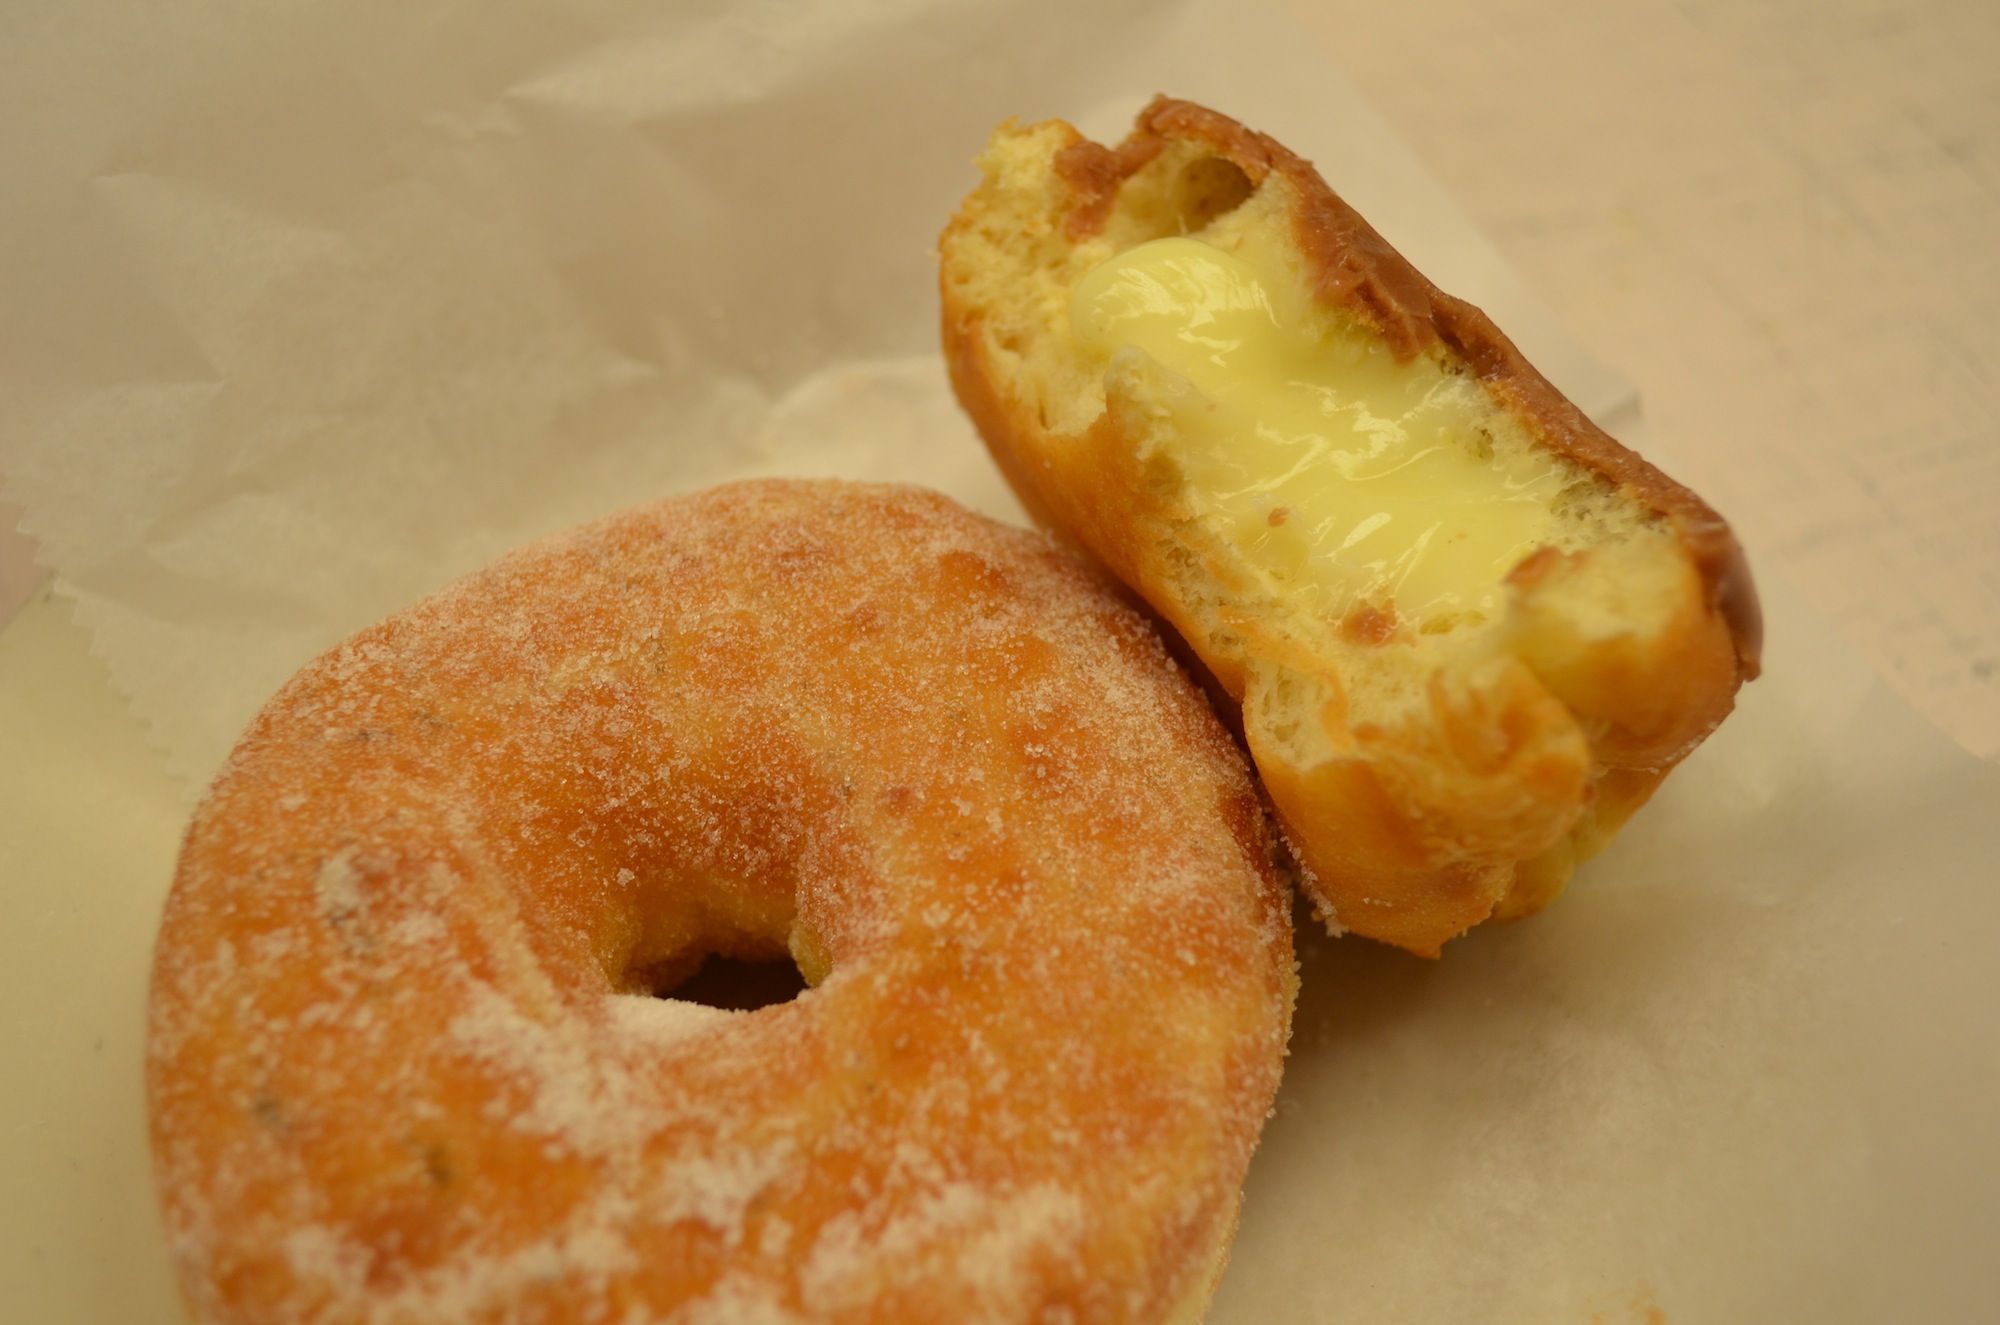 Shaikh’s Place (AKA Donut Shoppe) Lands On Eater’s List Of Top Donut Destinations